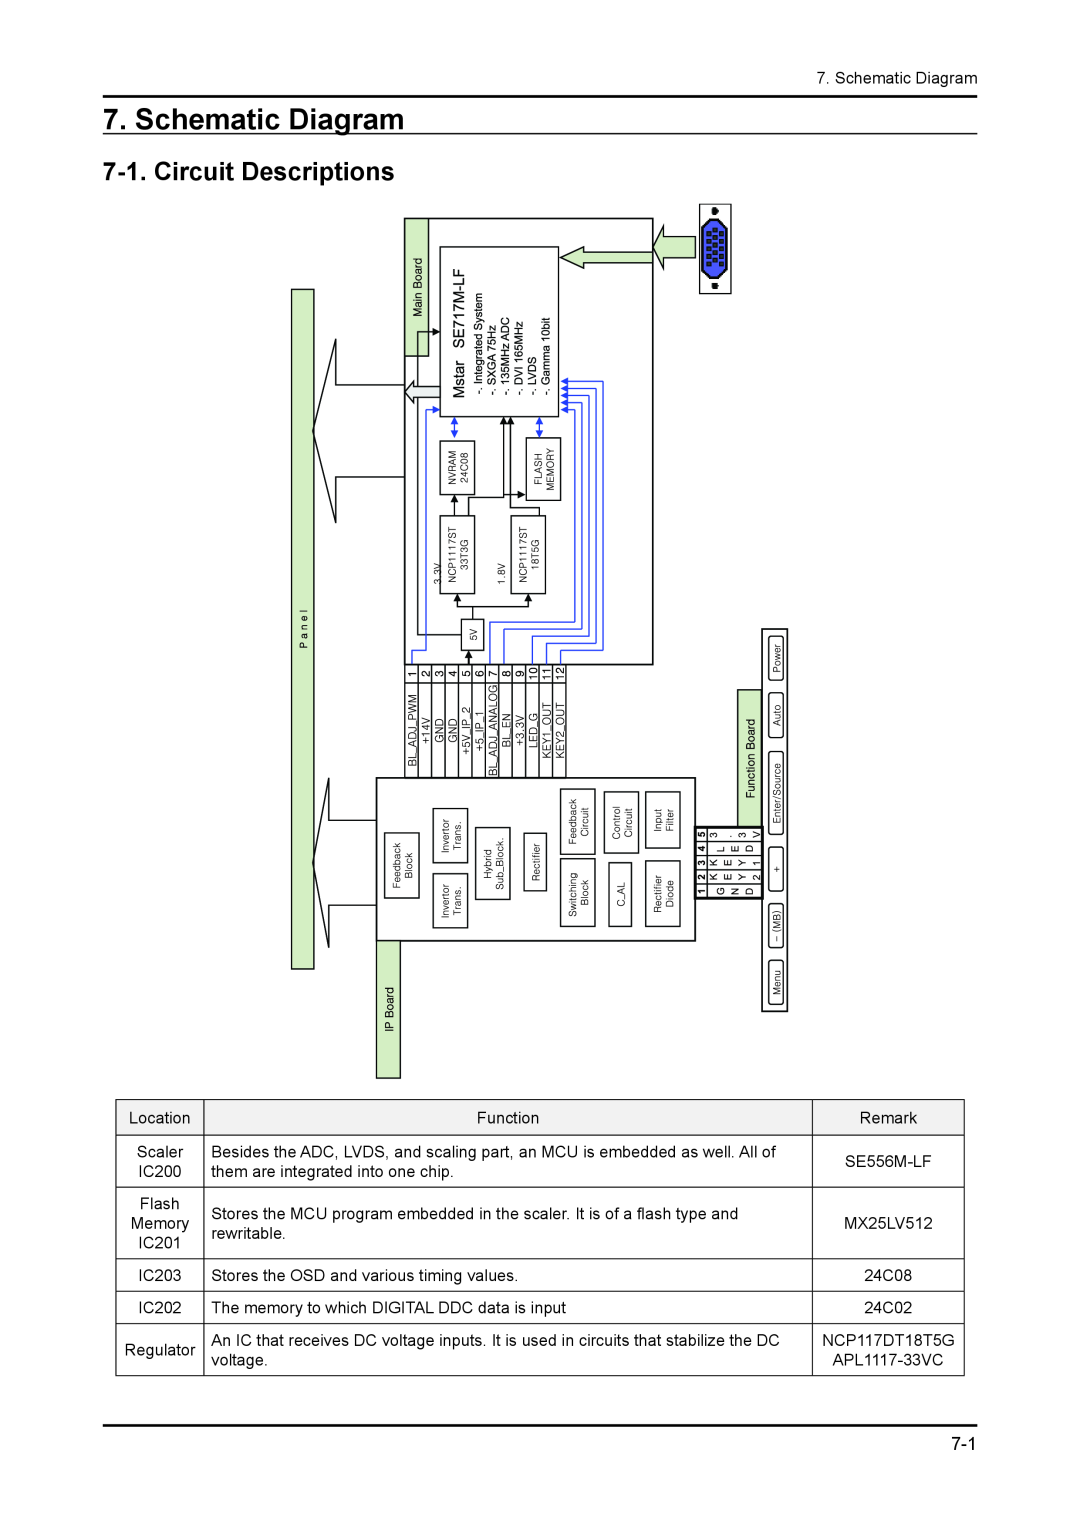 Samsung 943NWX service manual Schematic Diagram, Circuit Descriptions 